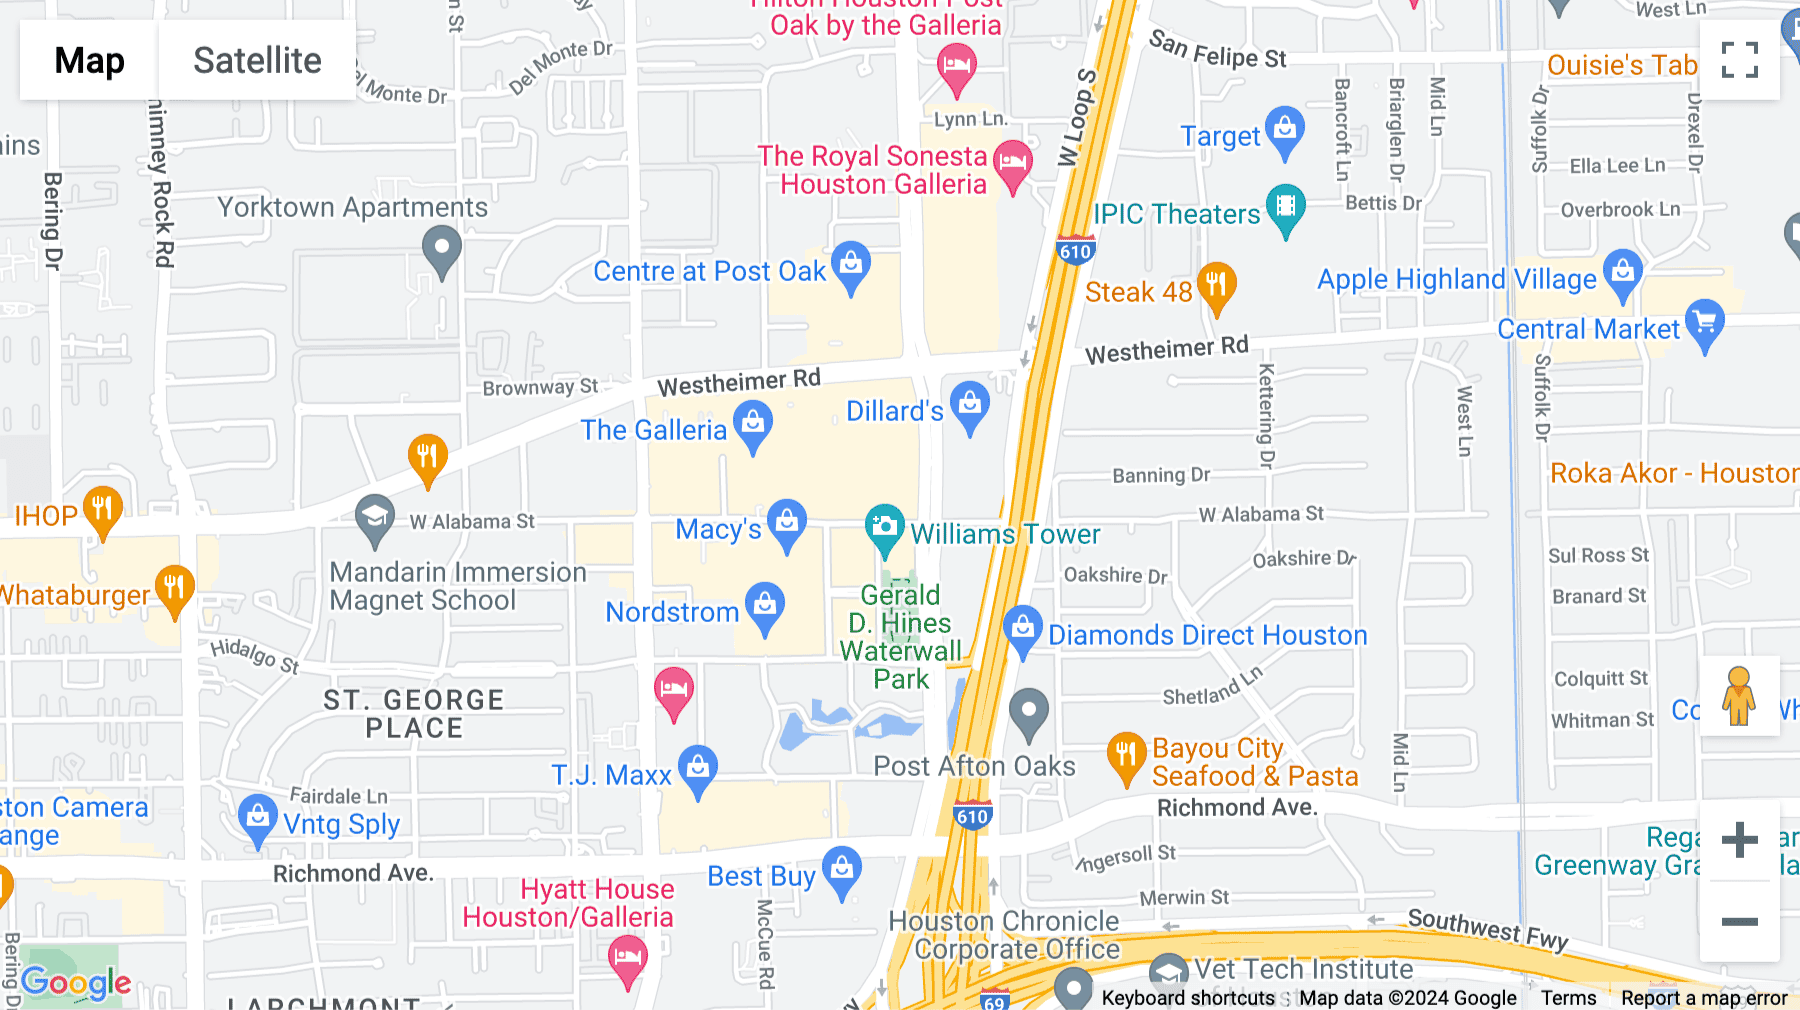 Click for interative map of Houston Galleria, 2700 Post Oak Boulevard, Houston